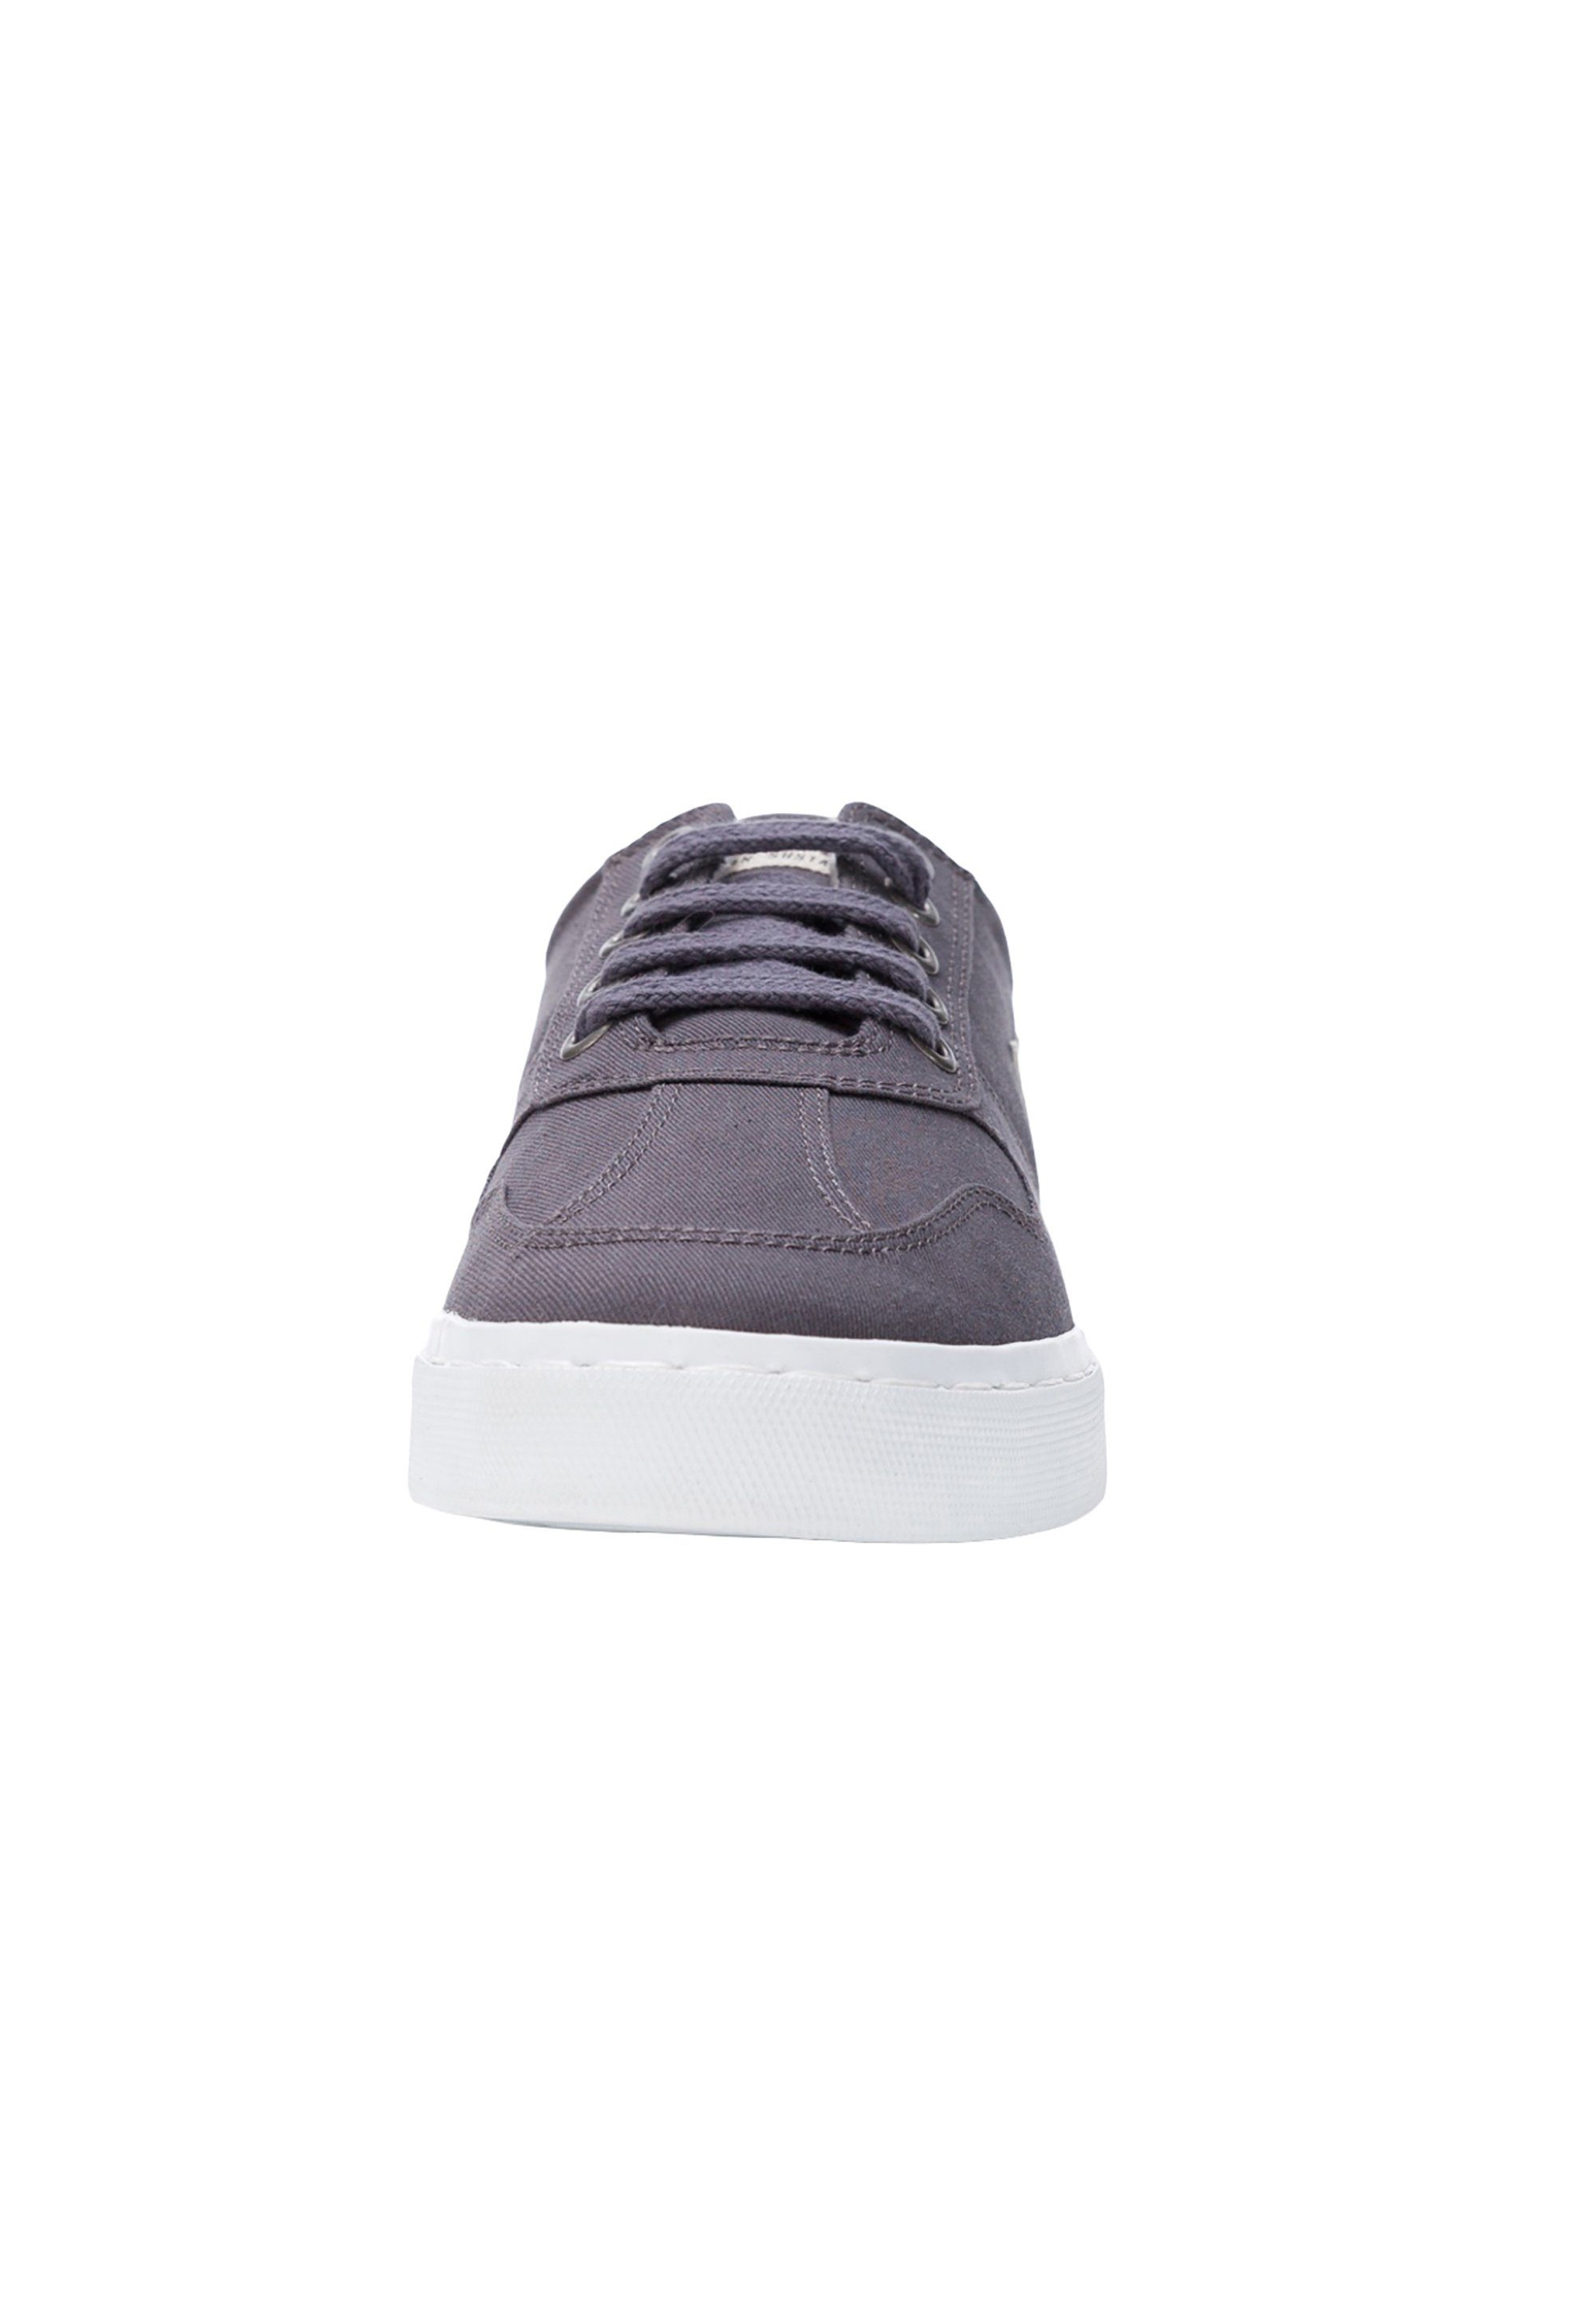 ETHLETIC Sneaker Produkt pewter grey Root II Fairtrade